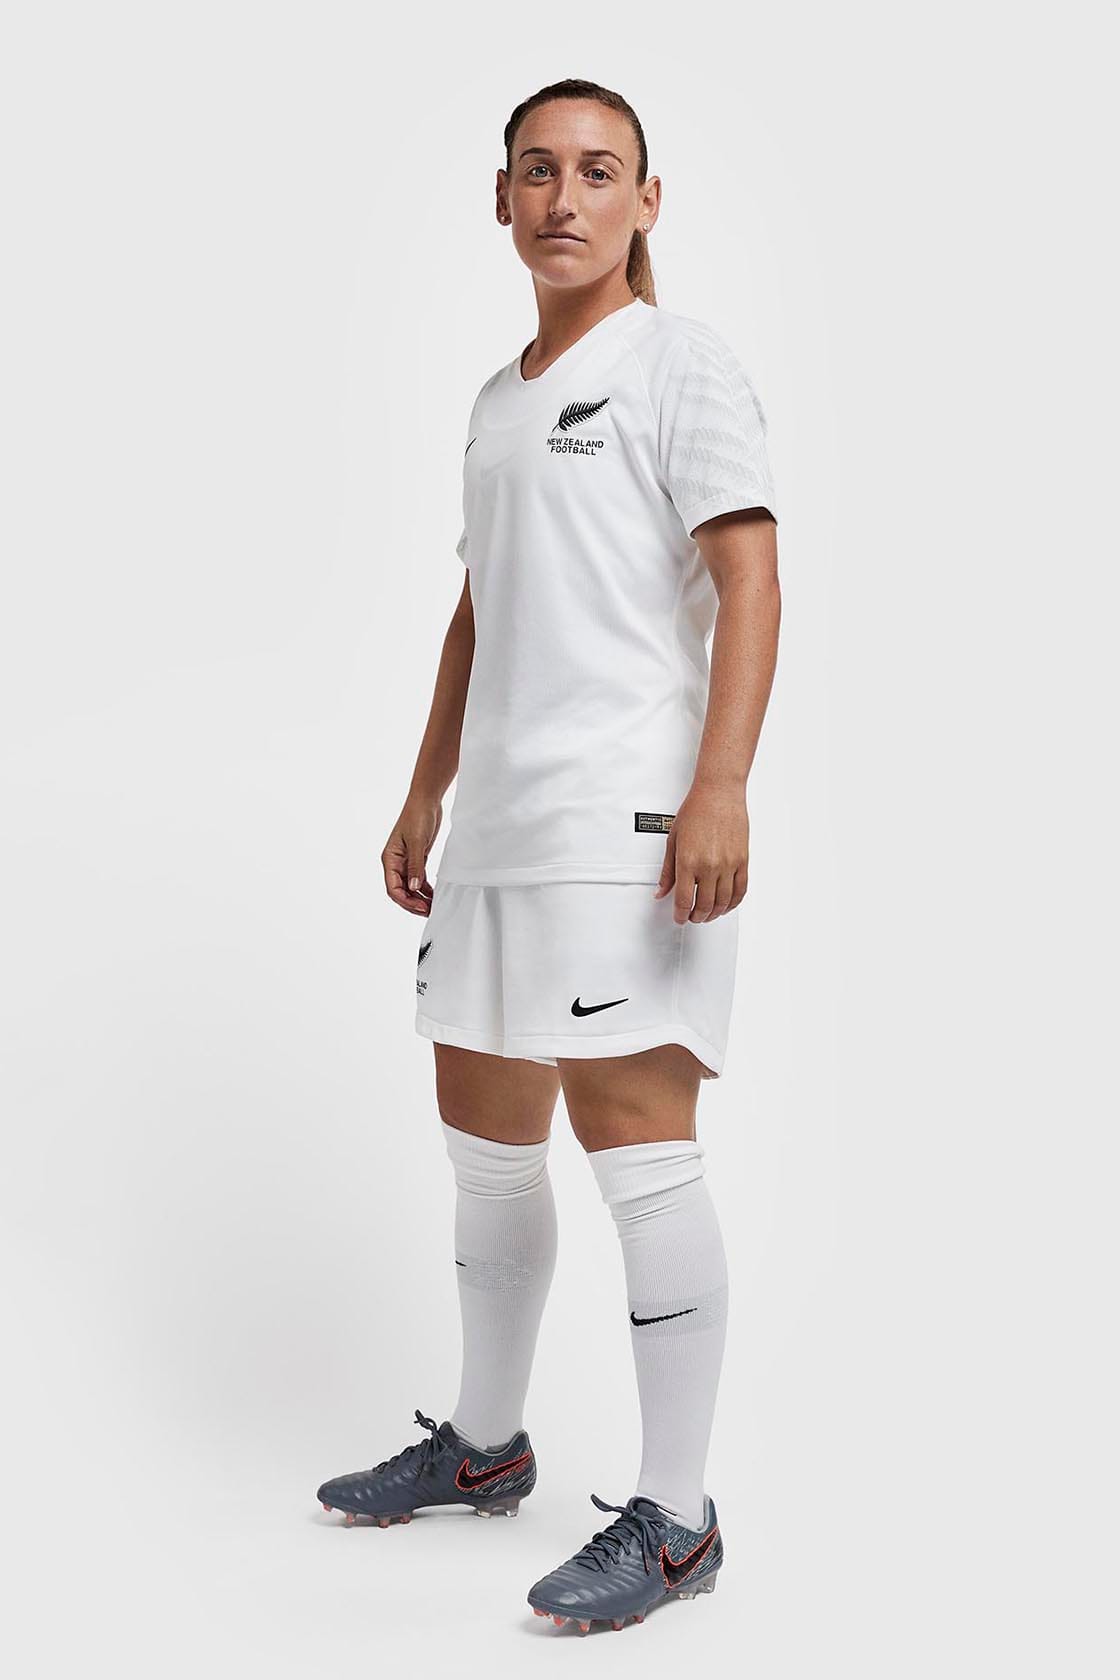 france women's soccer uniform